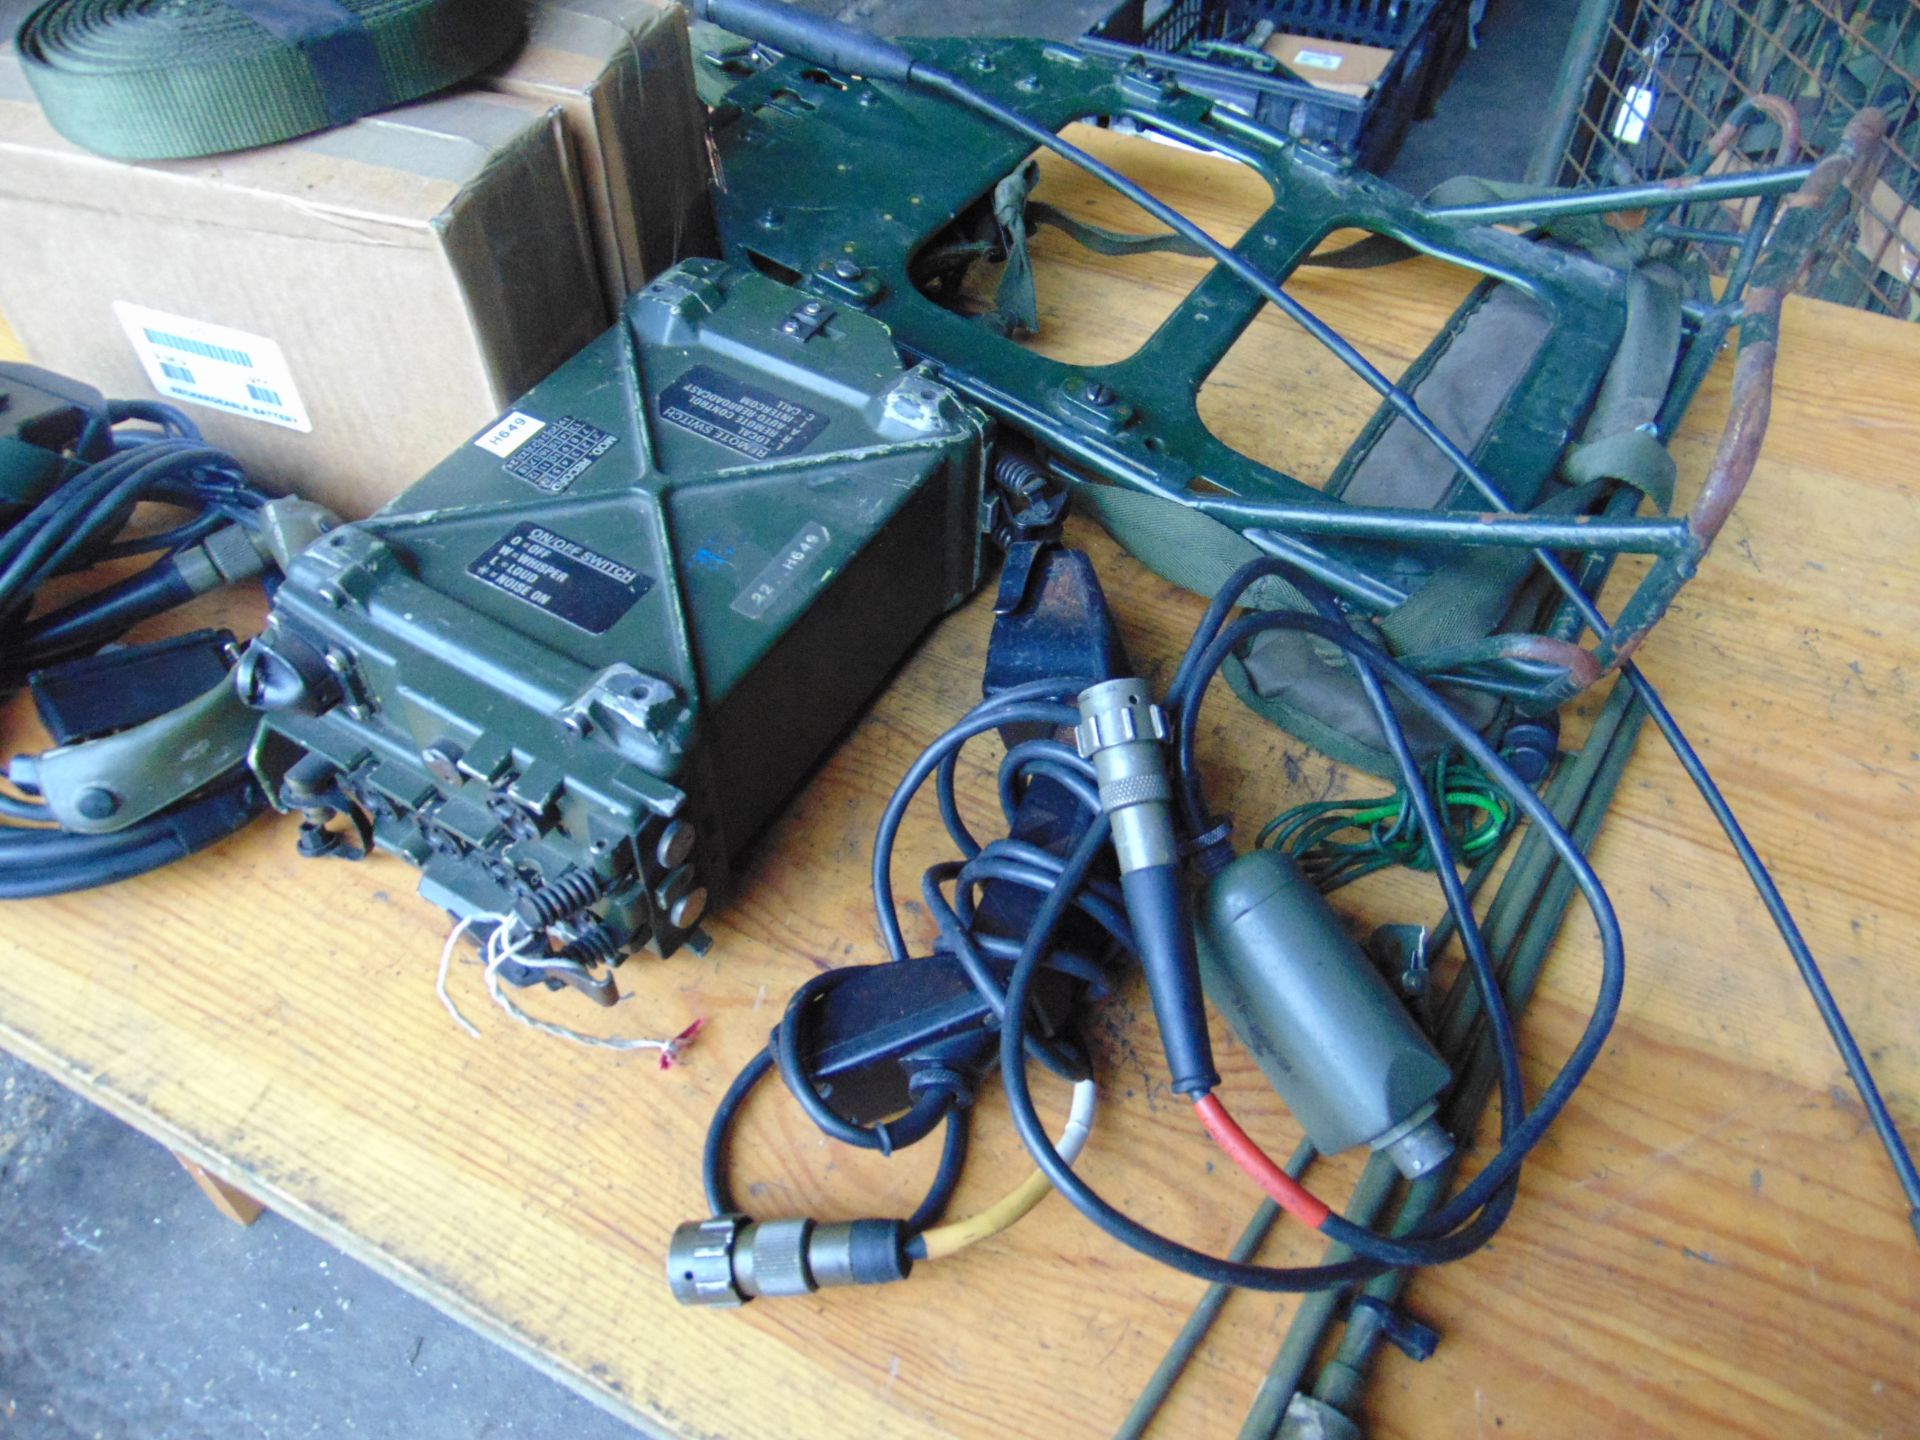 Clansman UKRT 351 Transmitter receiver C/W 2 New Batteries & Kit as shown - Image 5 of 5